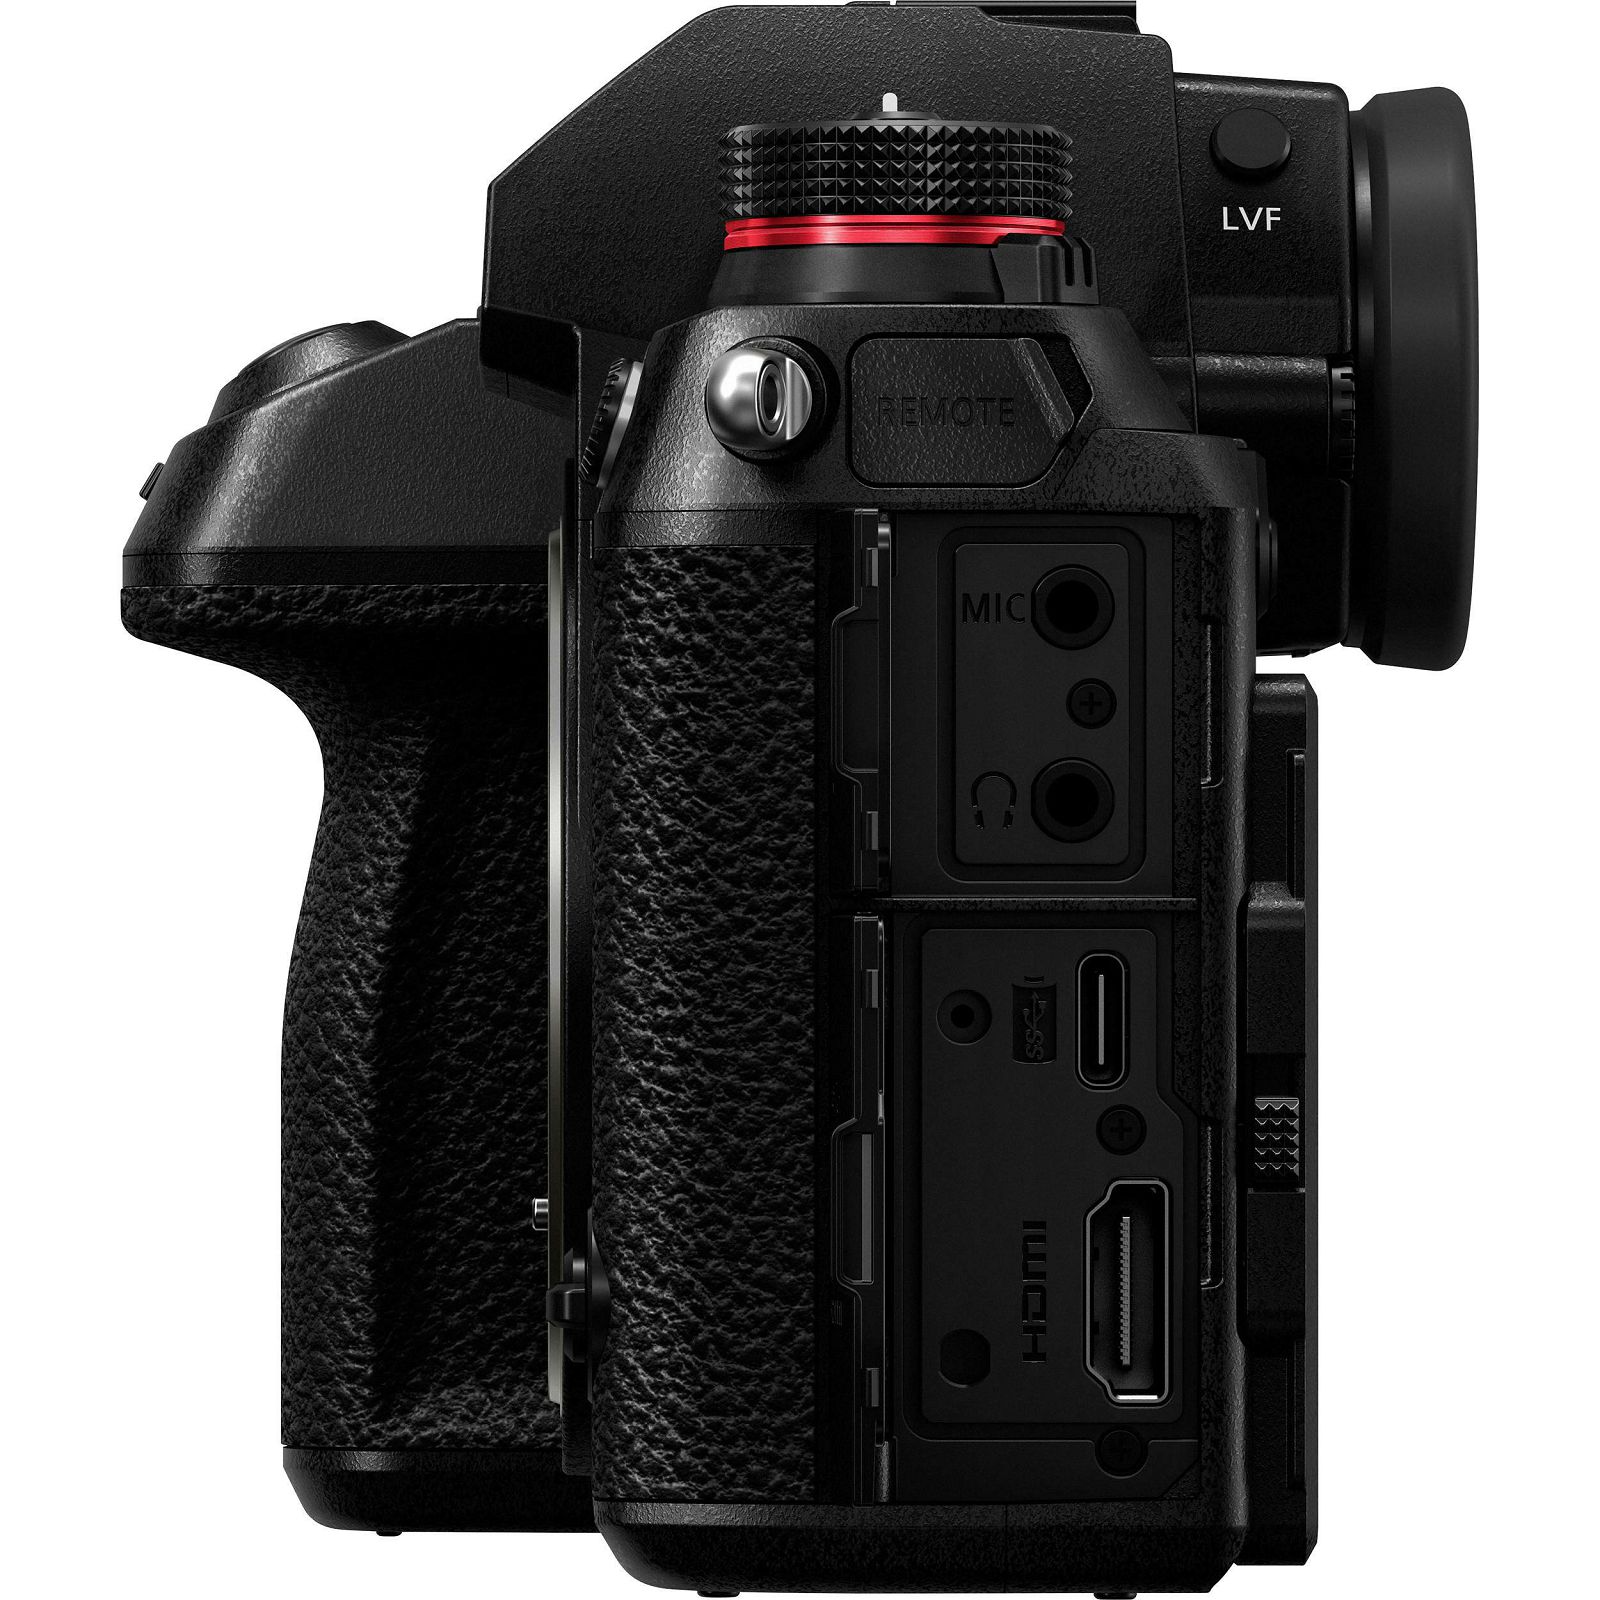 body 4k camera